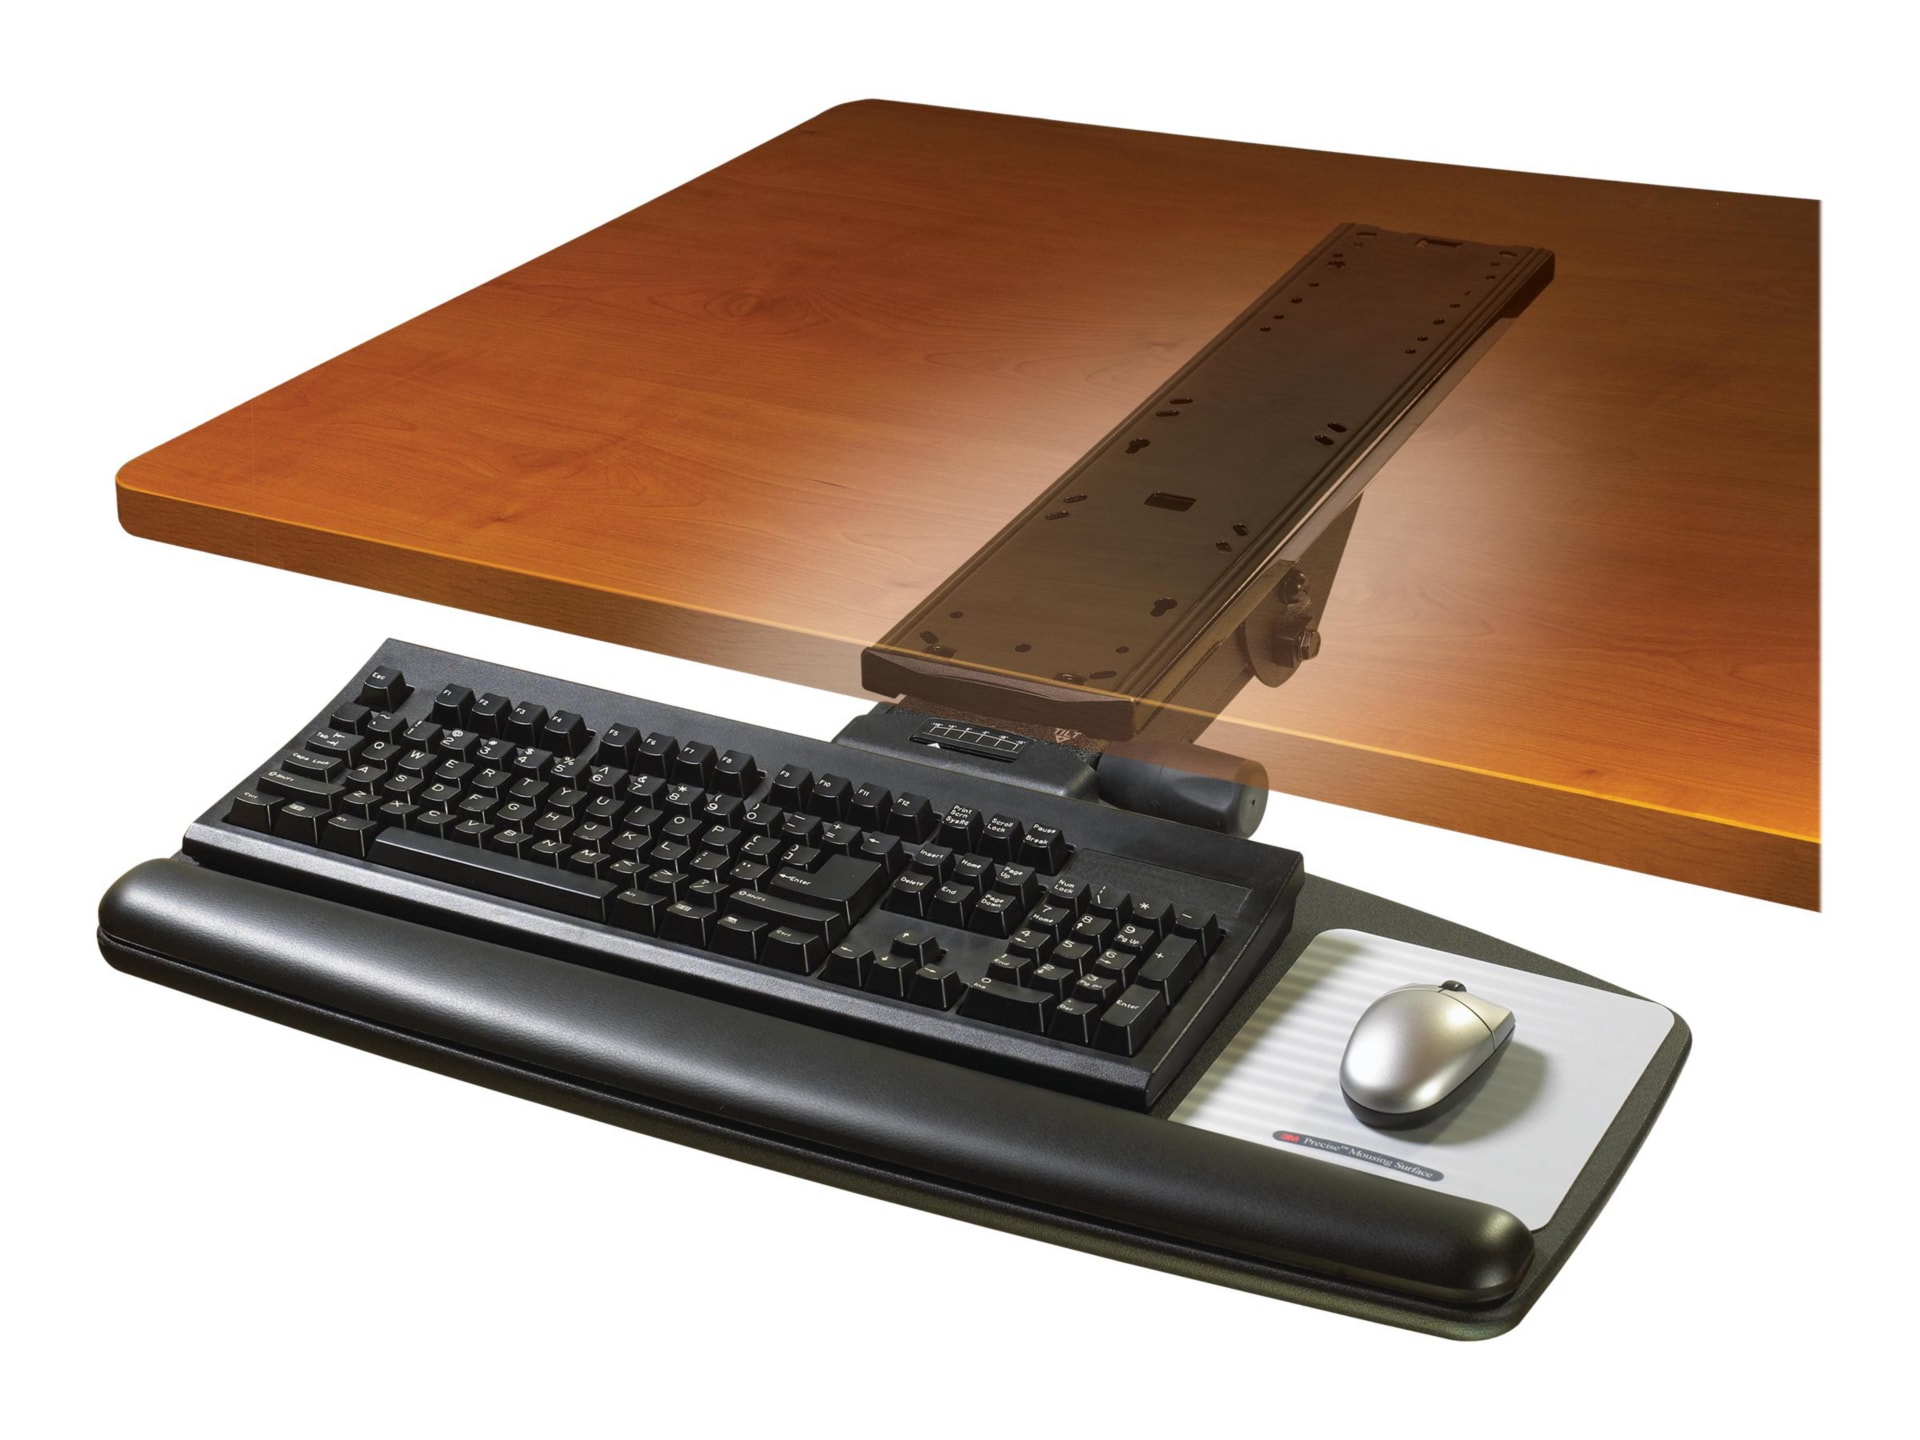 3M Adjustable Keyboard Tray AKT90LE - keyboard/mouse arm mount tray